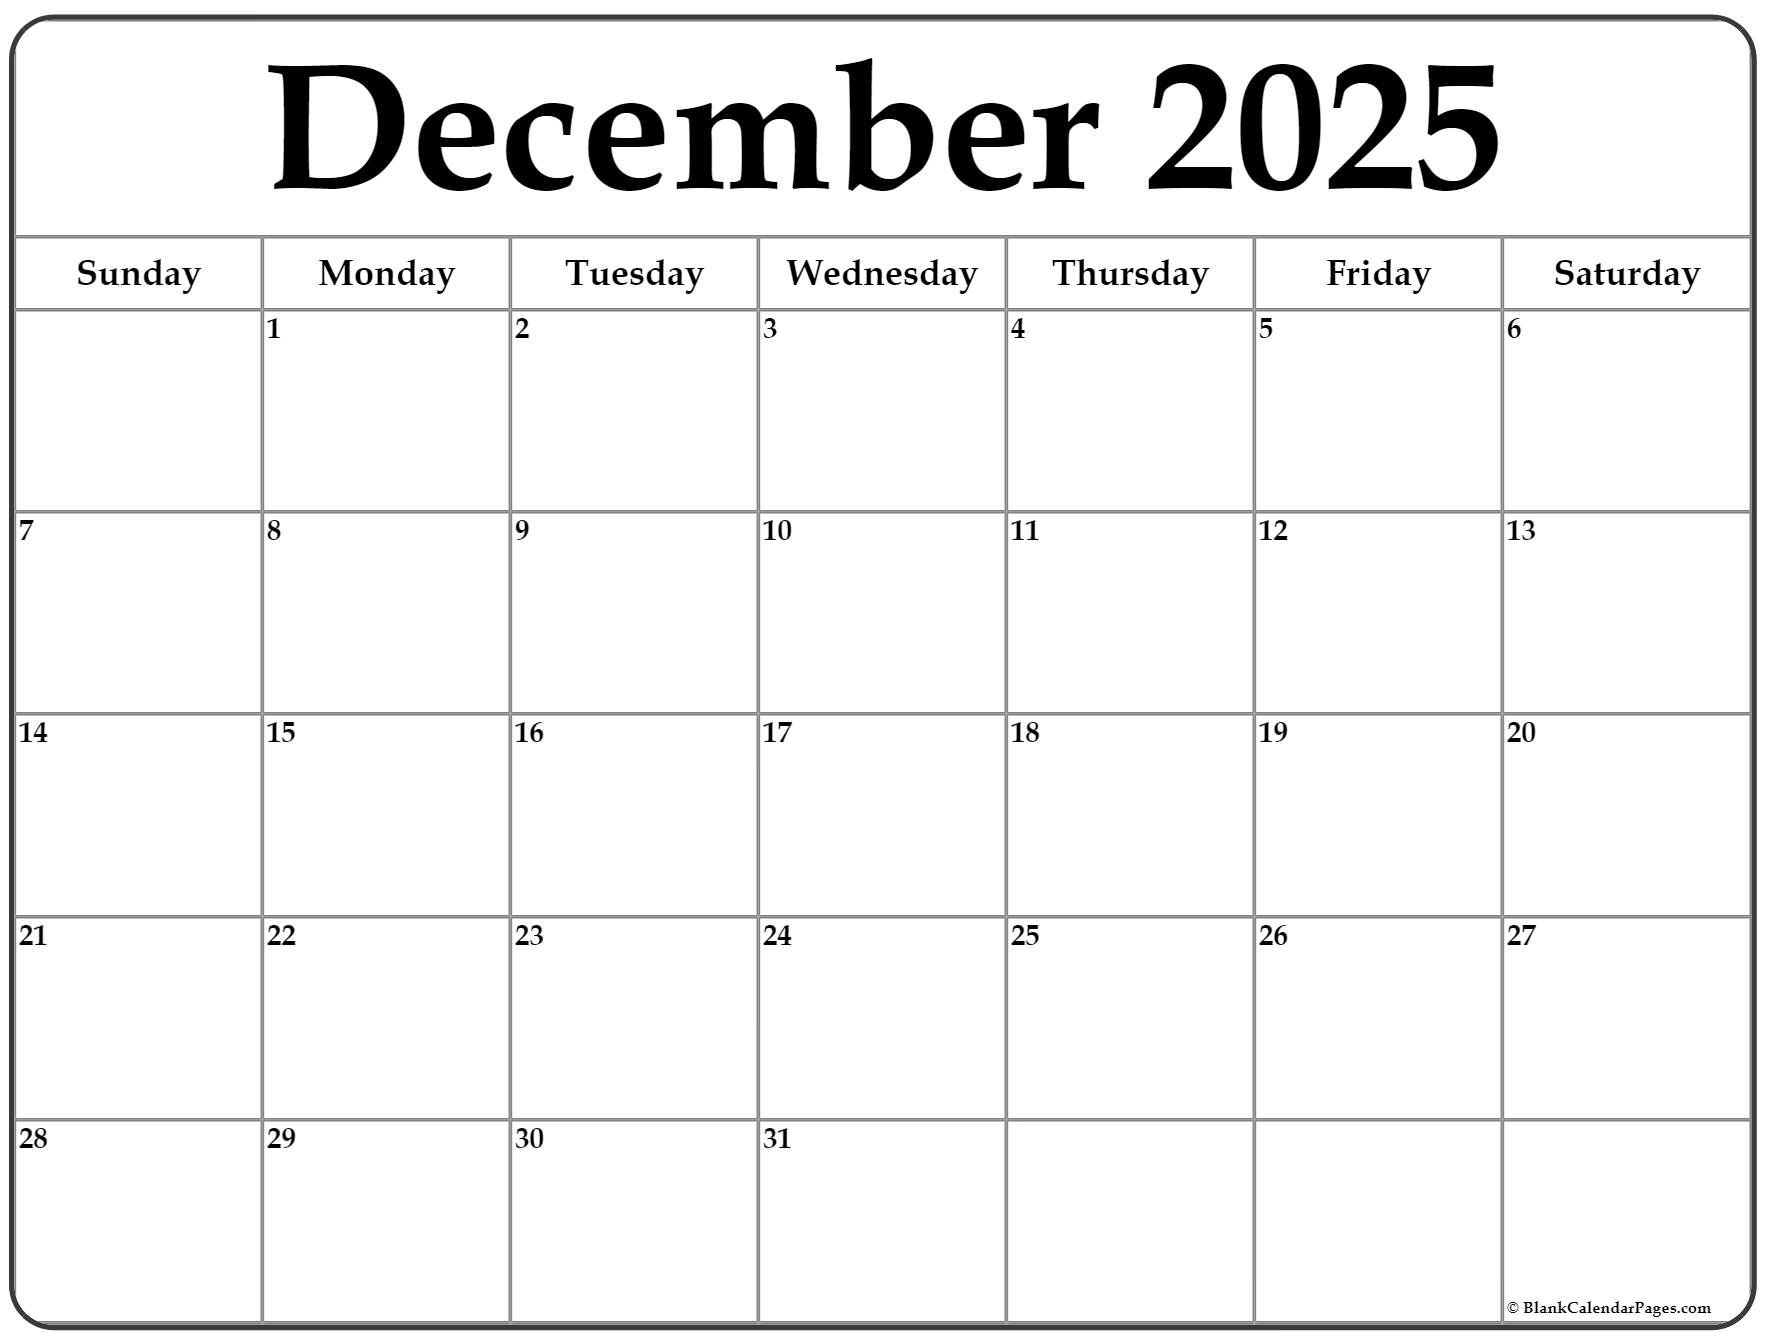 December 2025 Calendar Download 